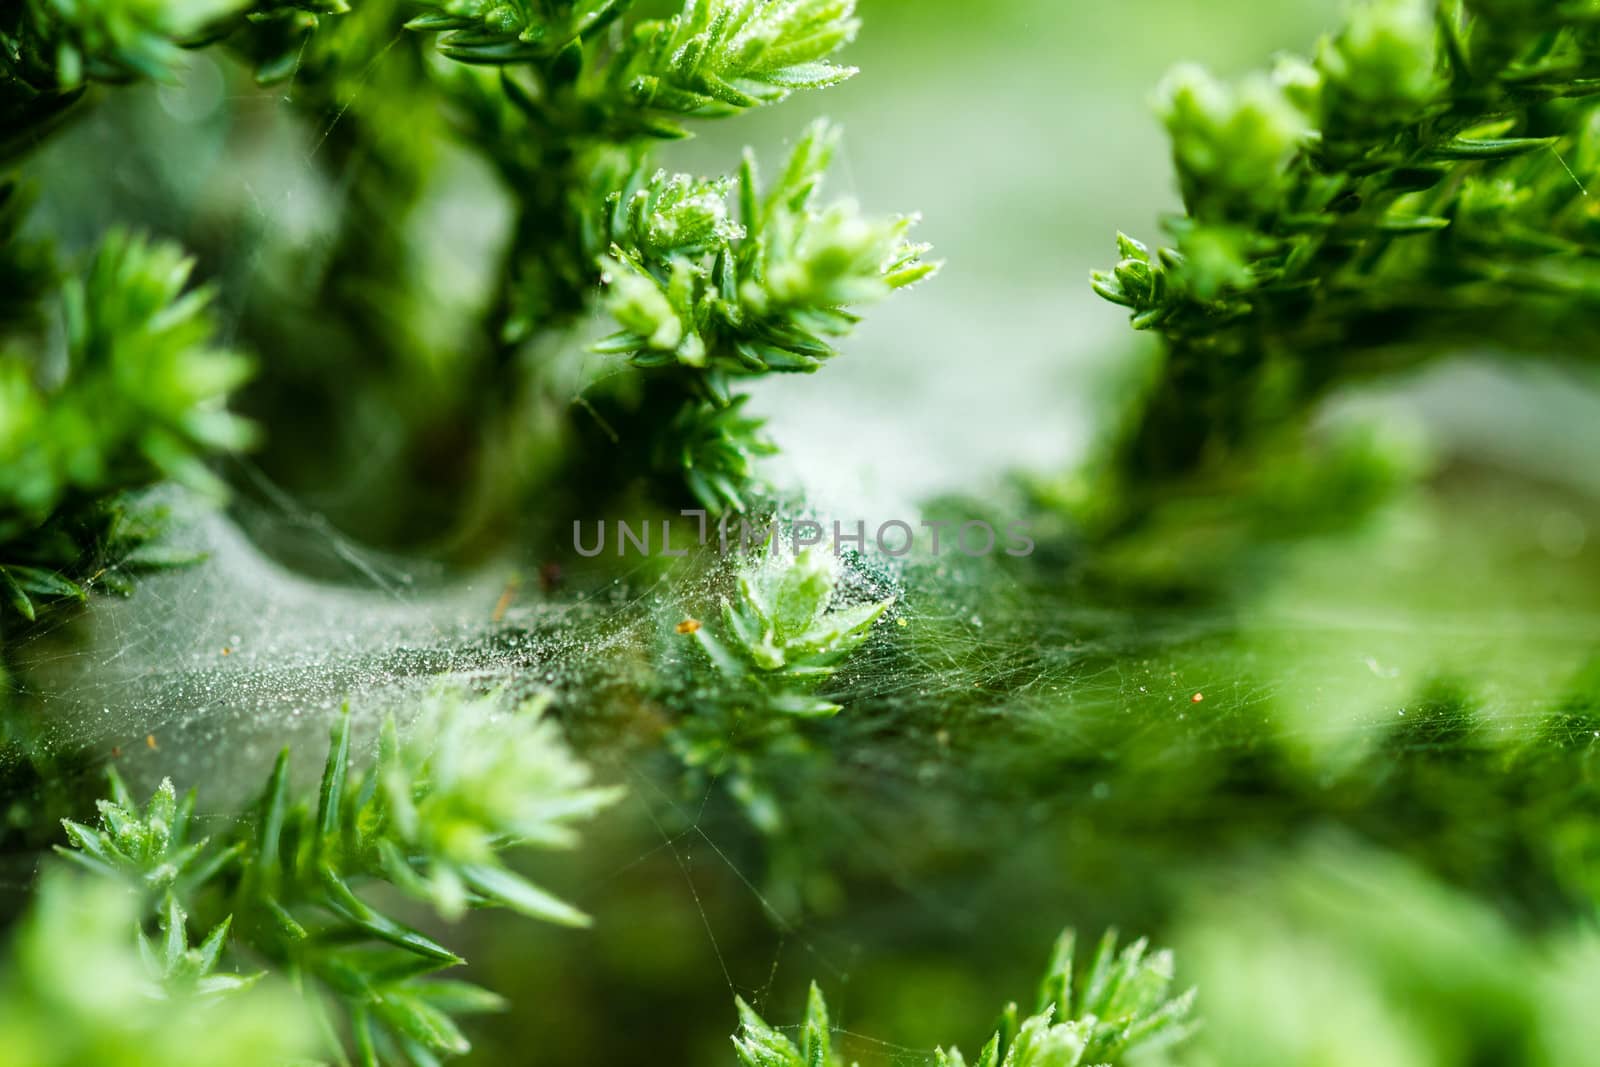 Spider Web On Pine Leaf by azamshah72